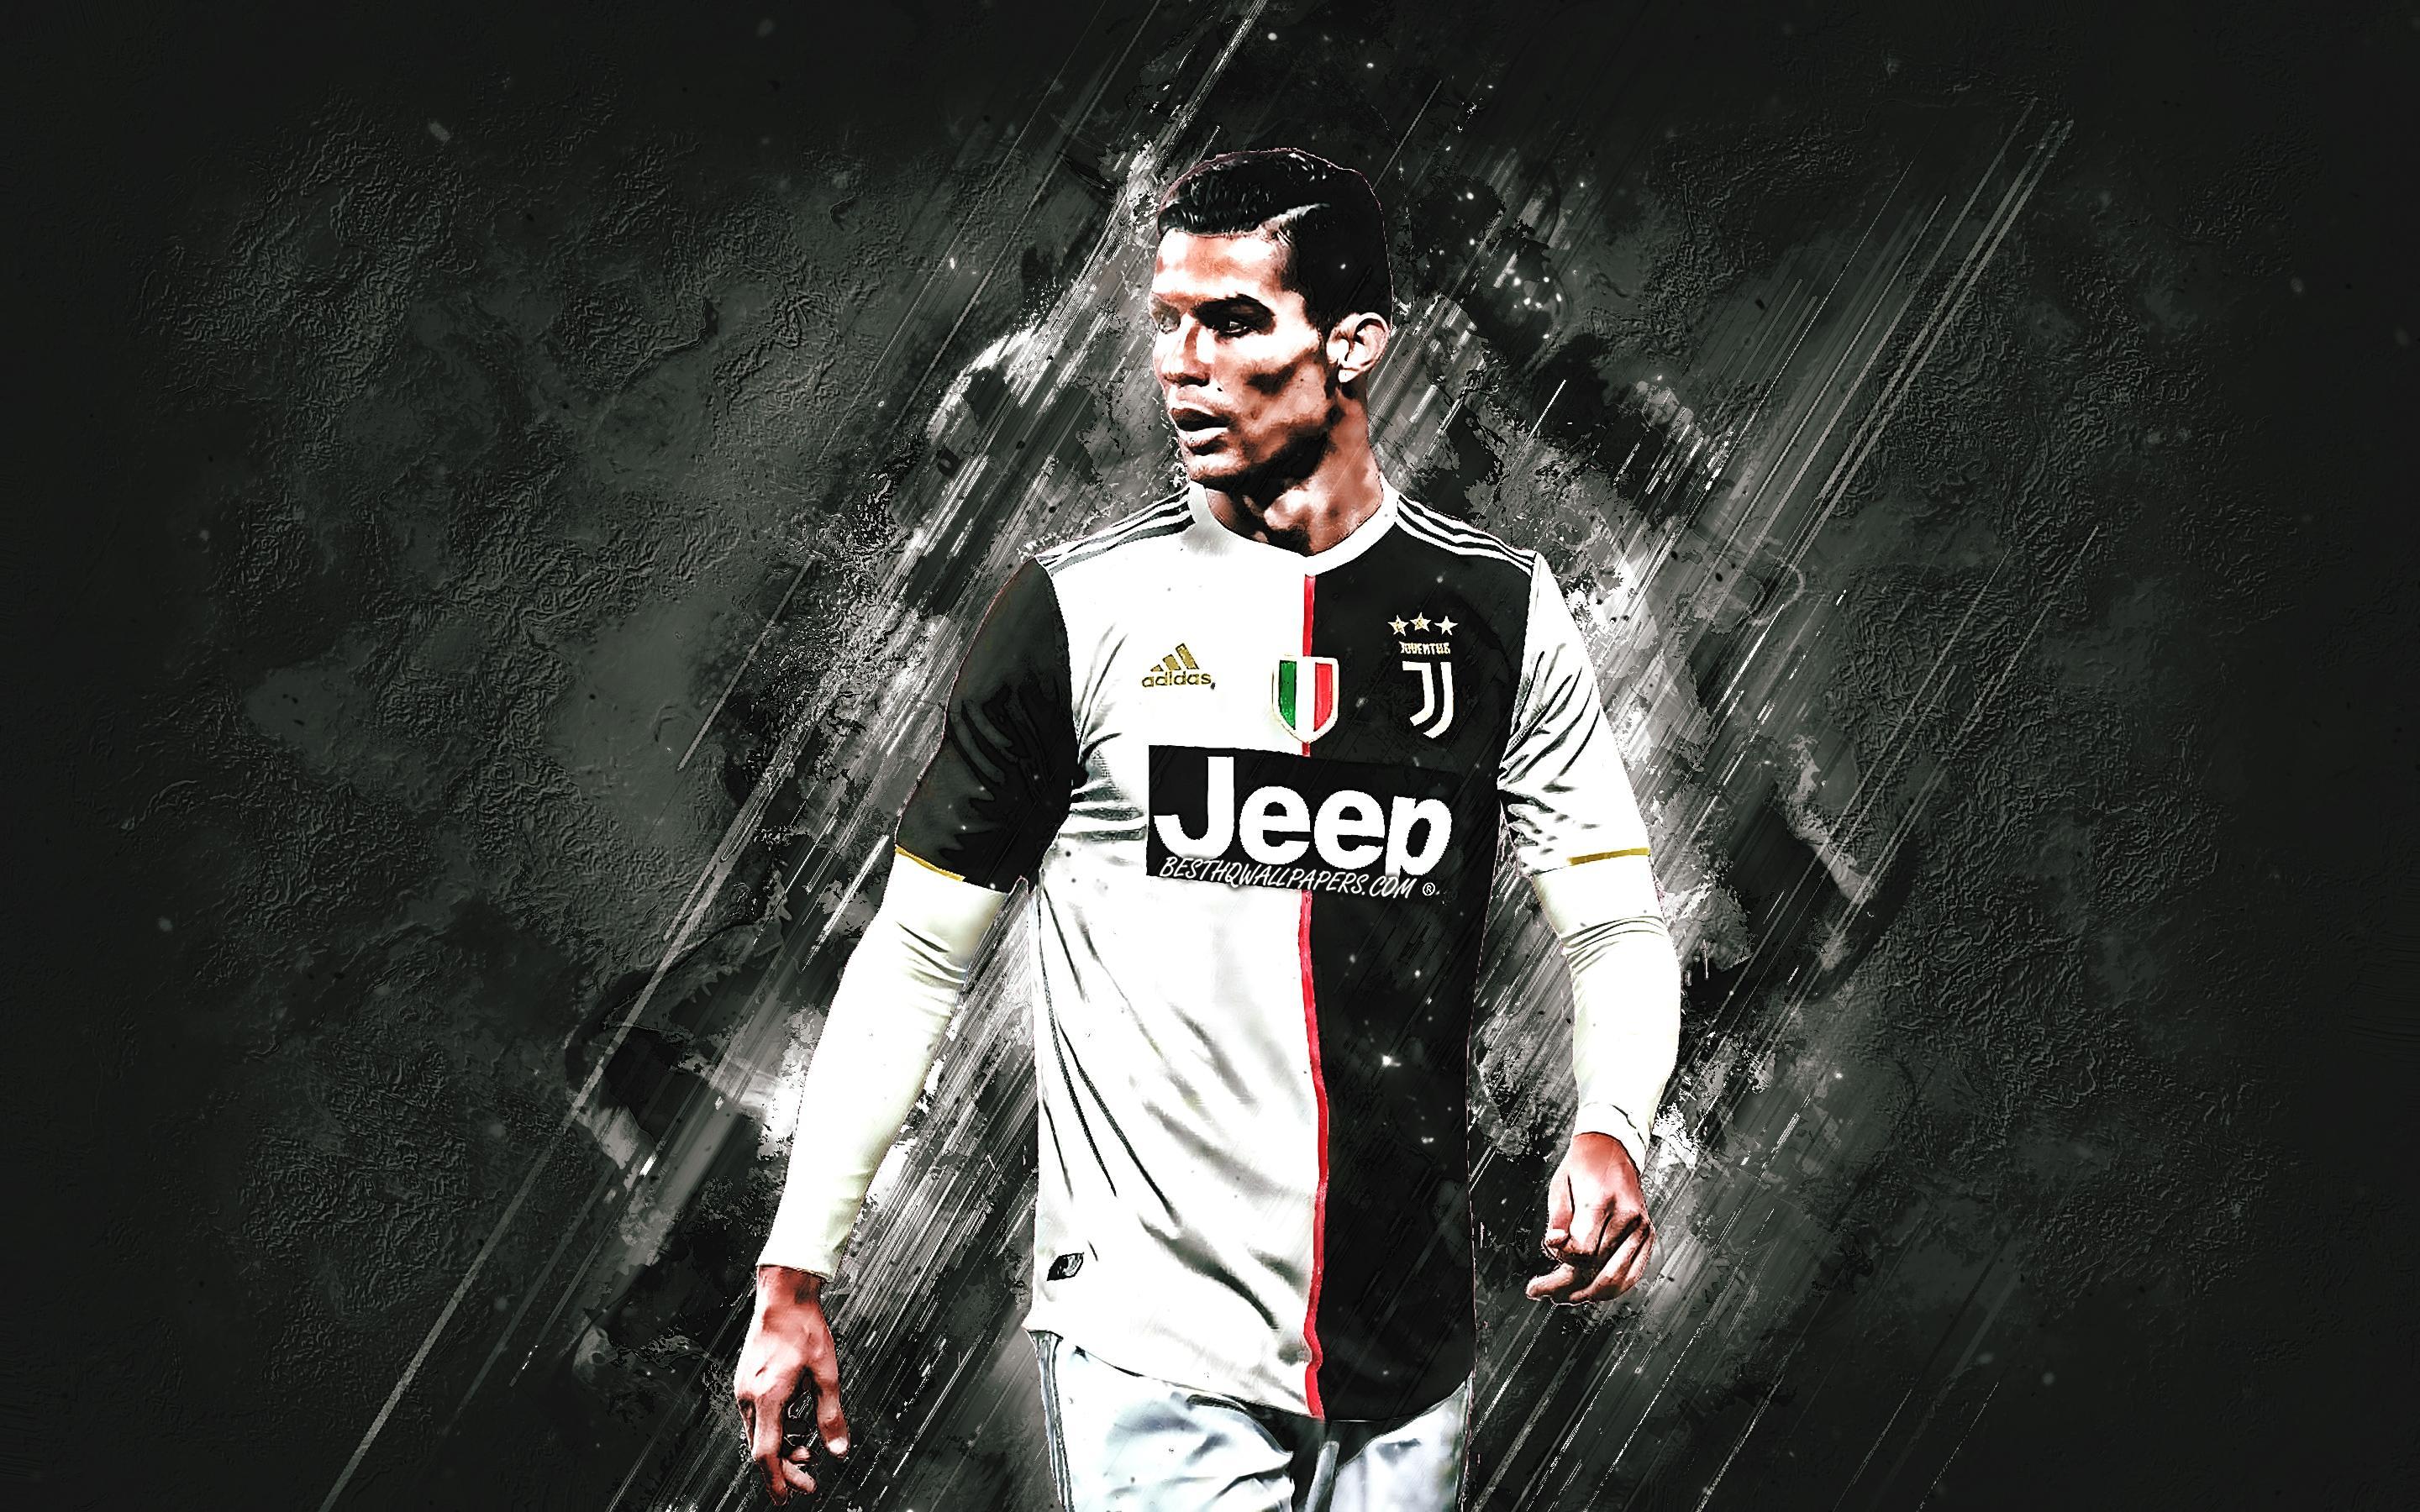 Cristiano Ronaldo 2020 Wallpapers - Wallpaper Cave